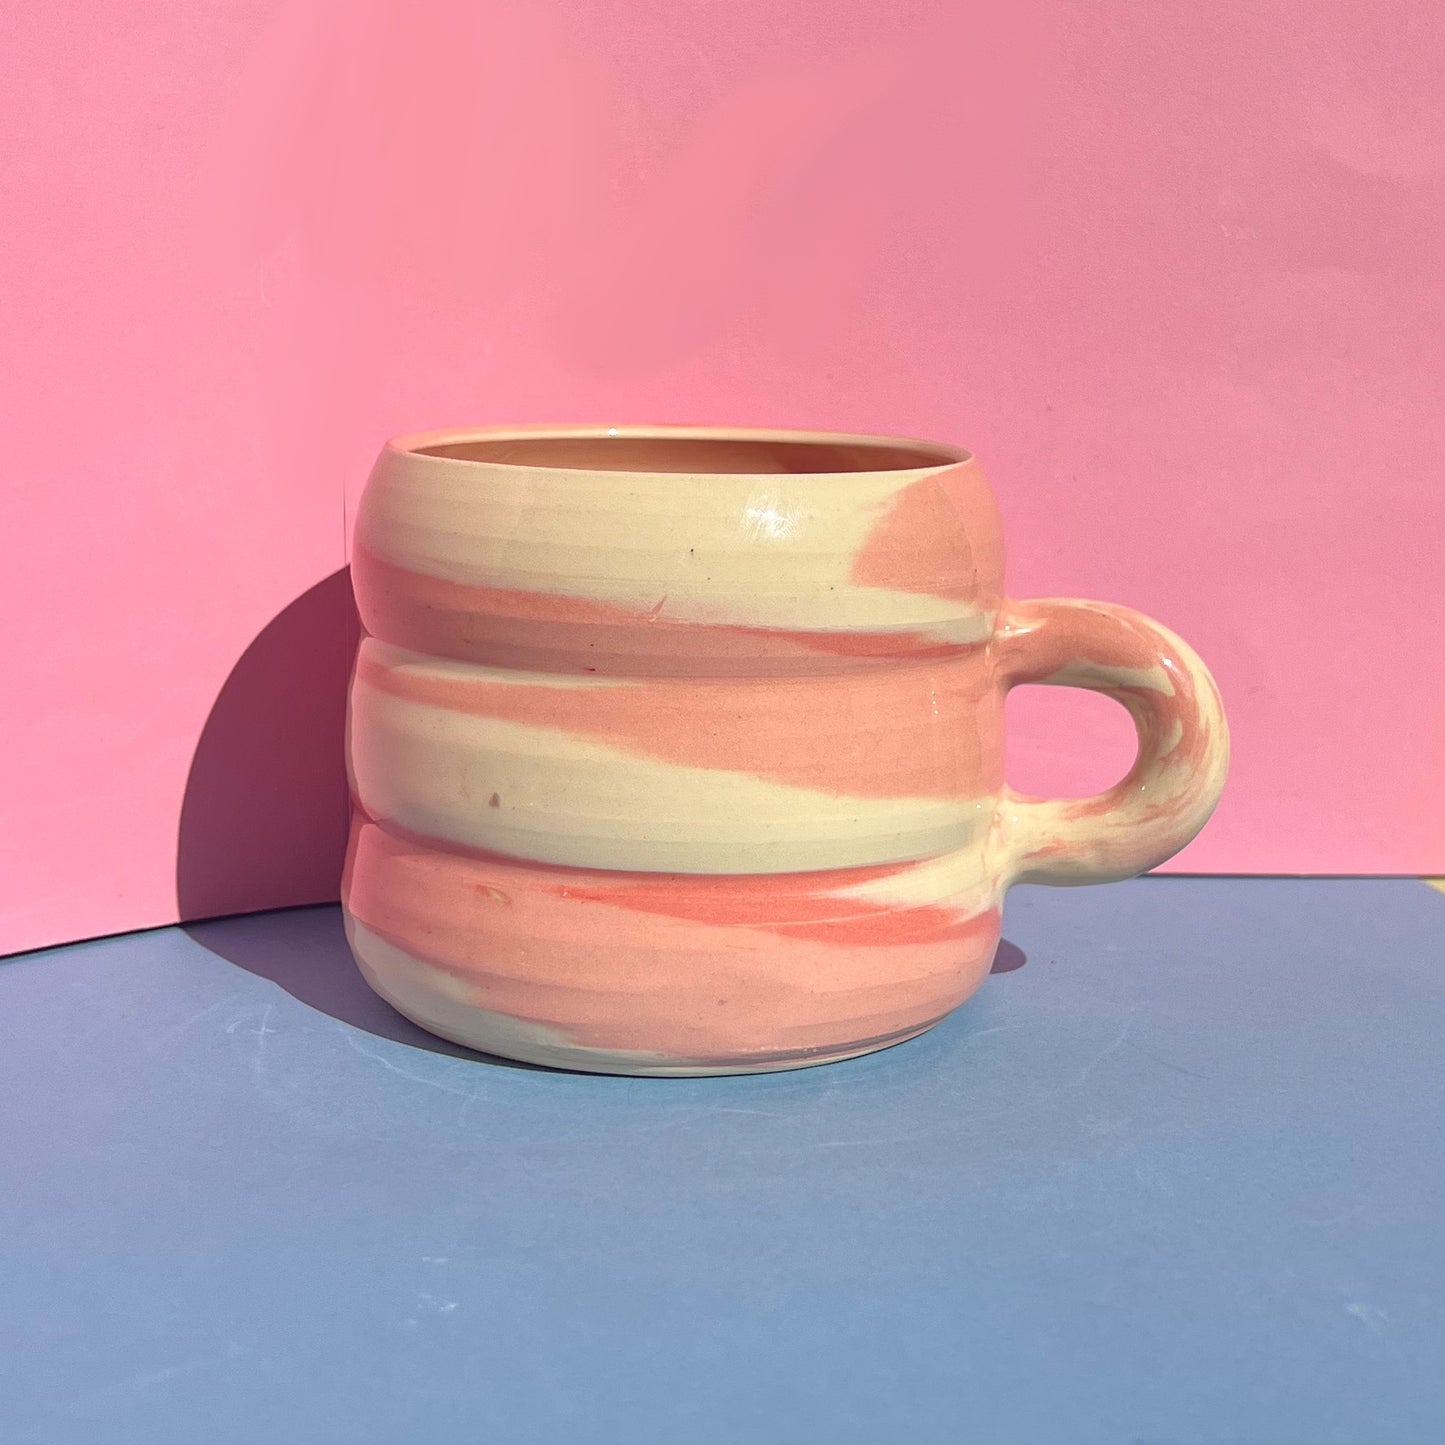 Rosy swirly mug